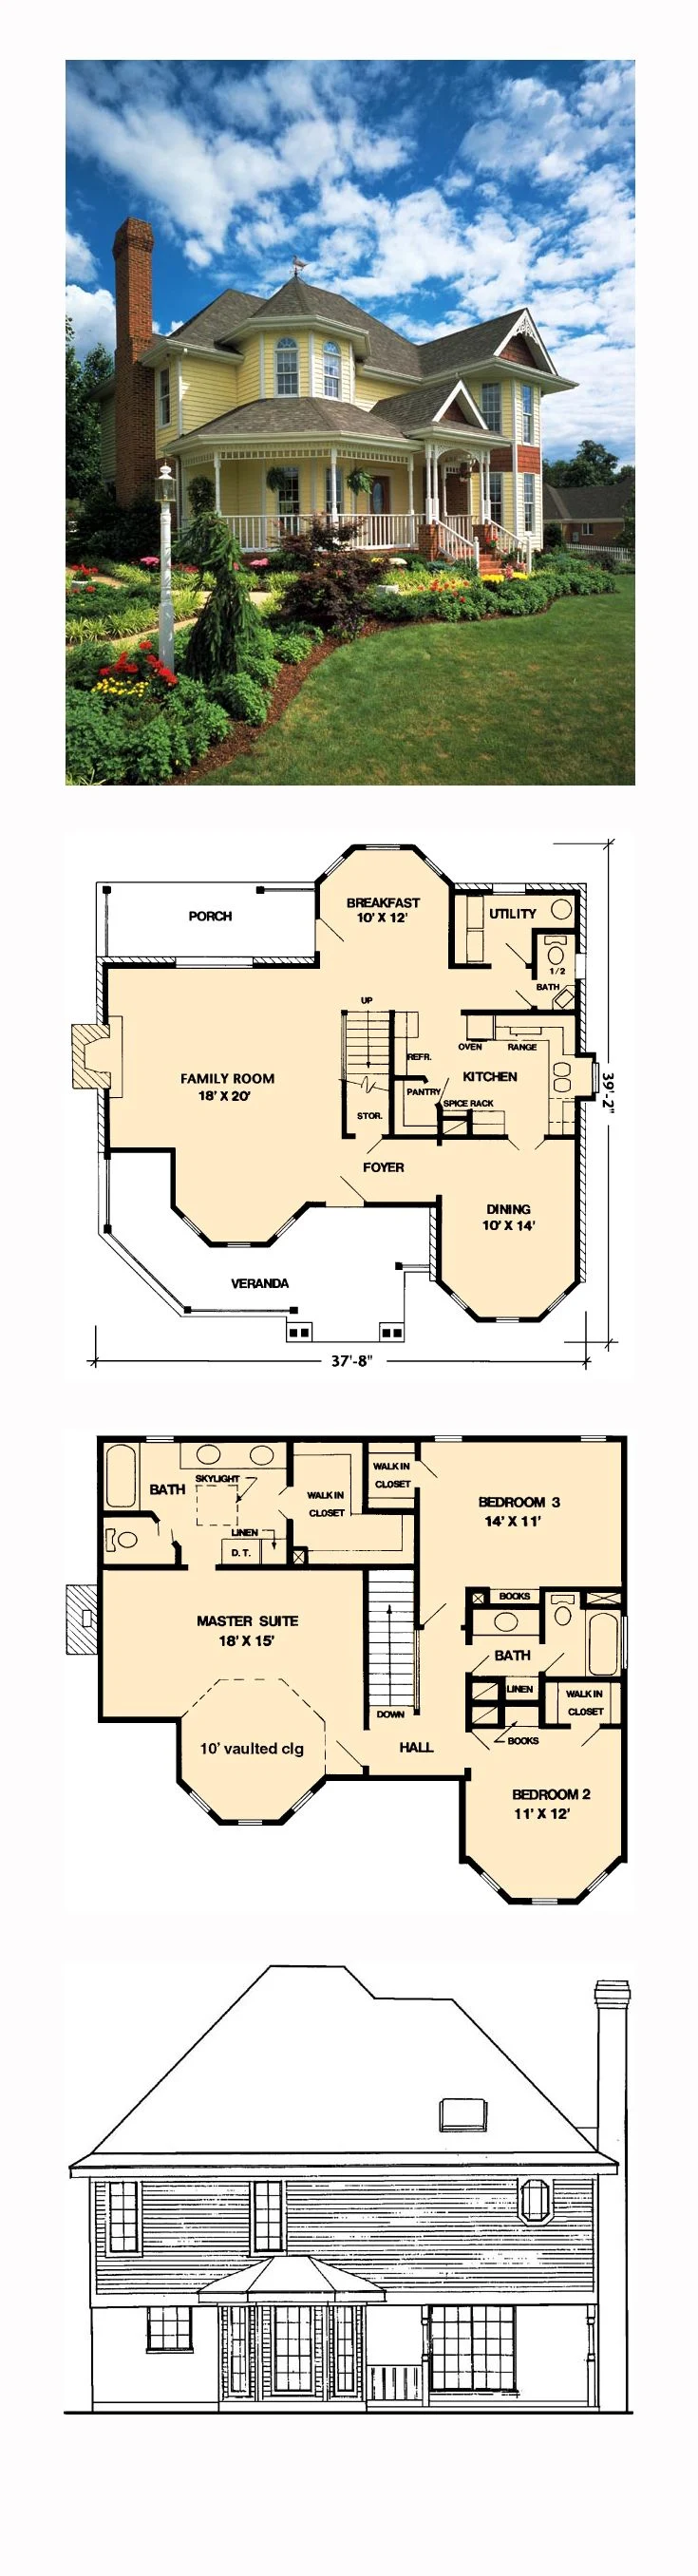 3 Bedroom Victorian House Plans